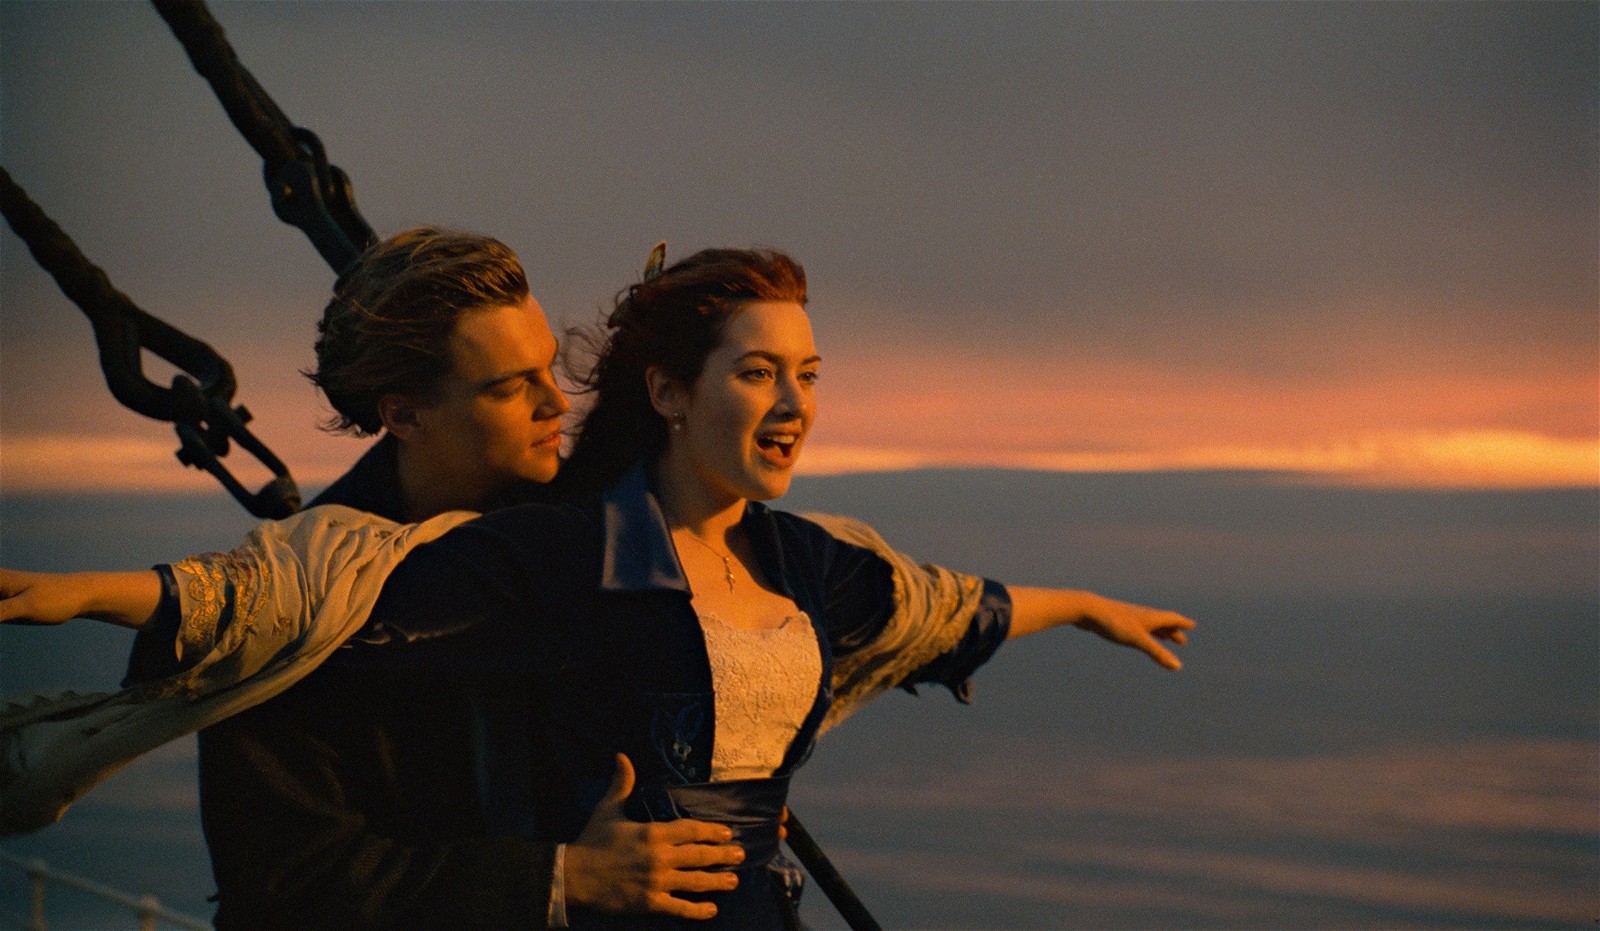 Leonardo DiCaprio and Kate Winslet doing the iconic scene.